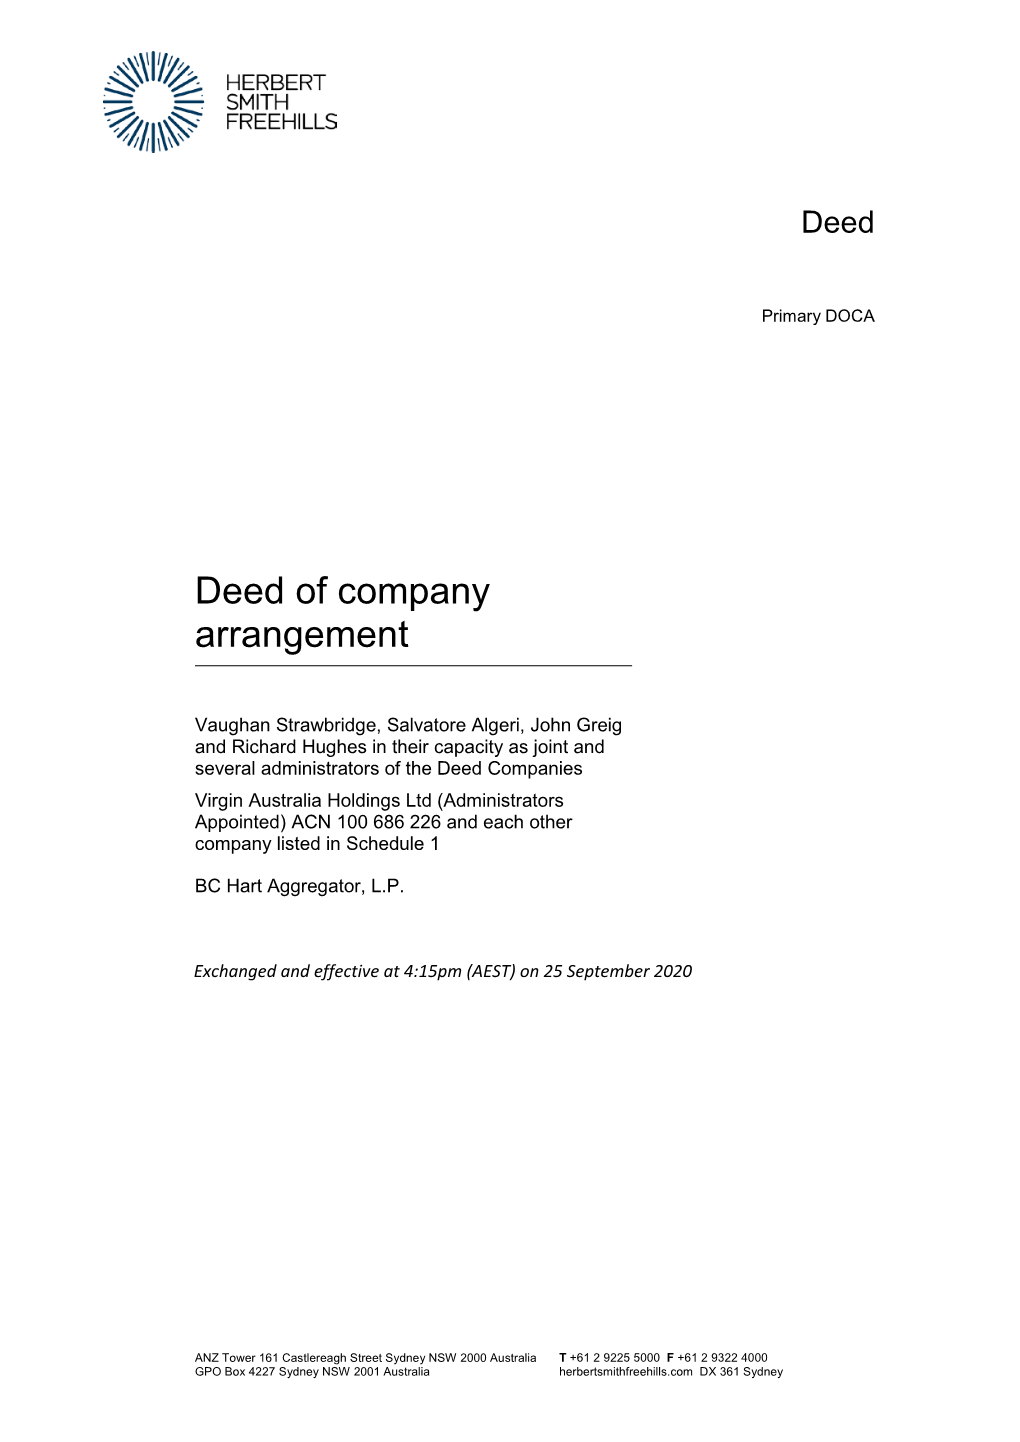 Deed of Company Arrangement